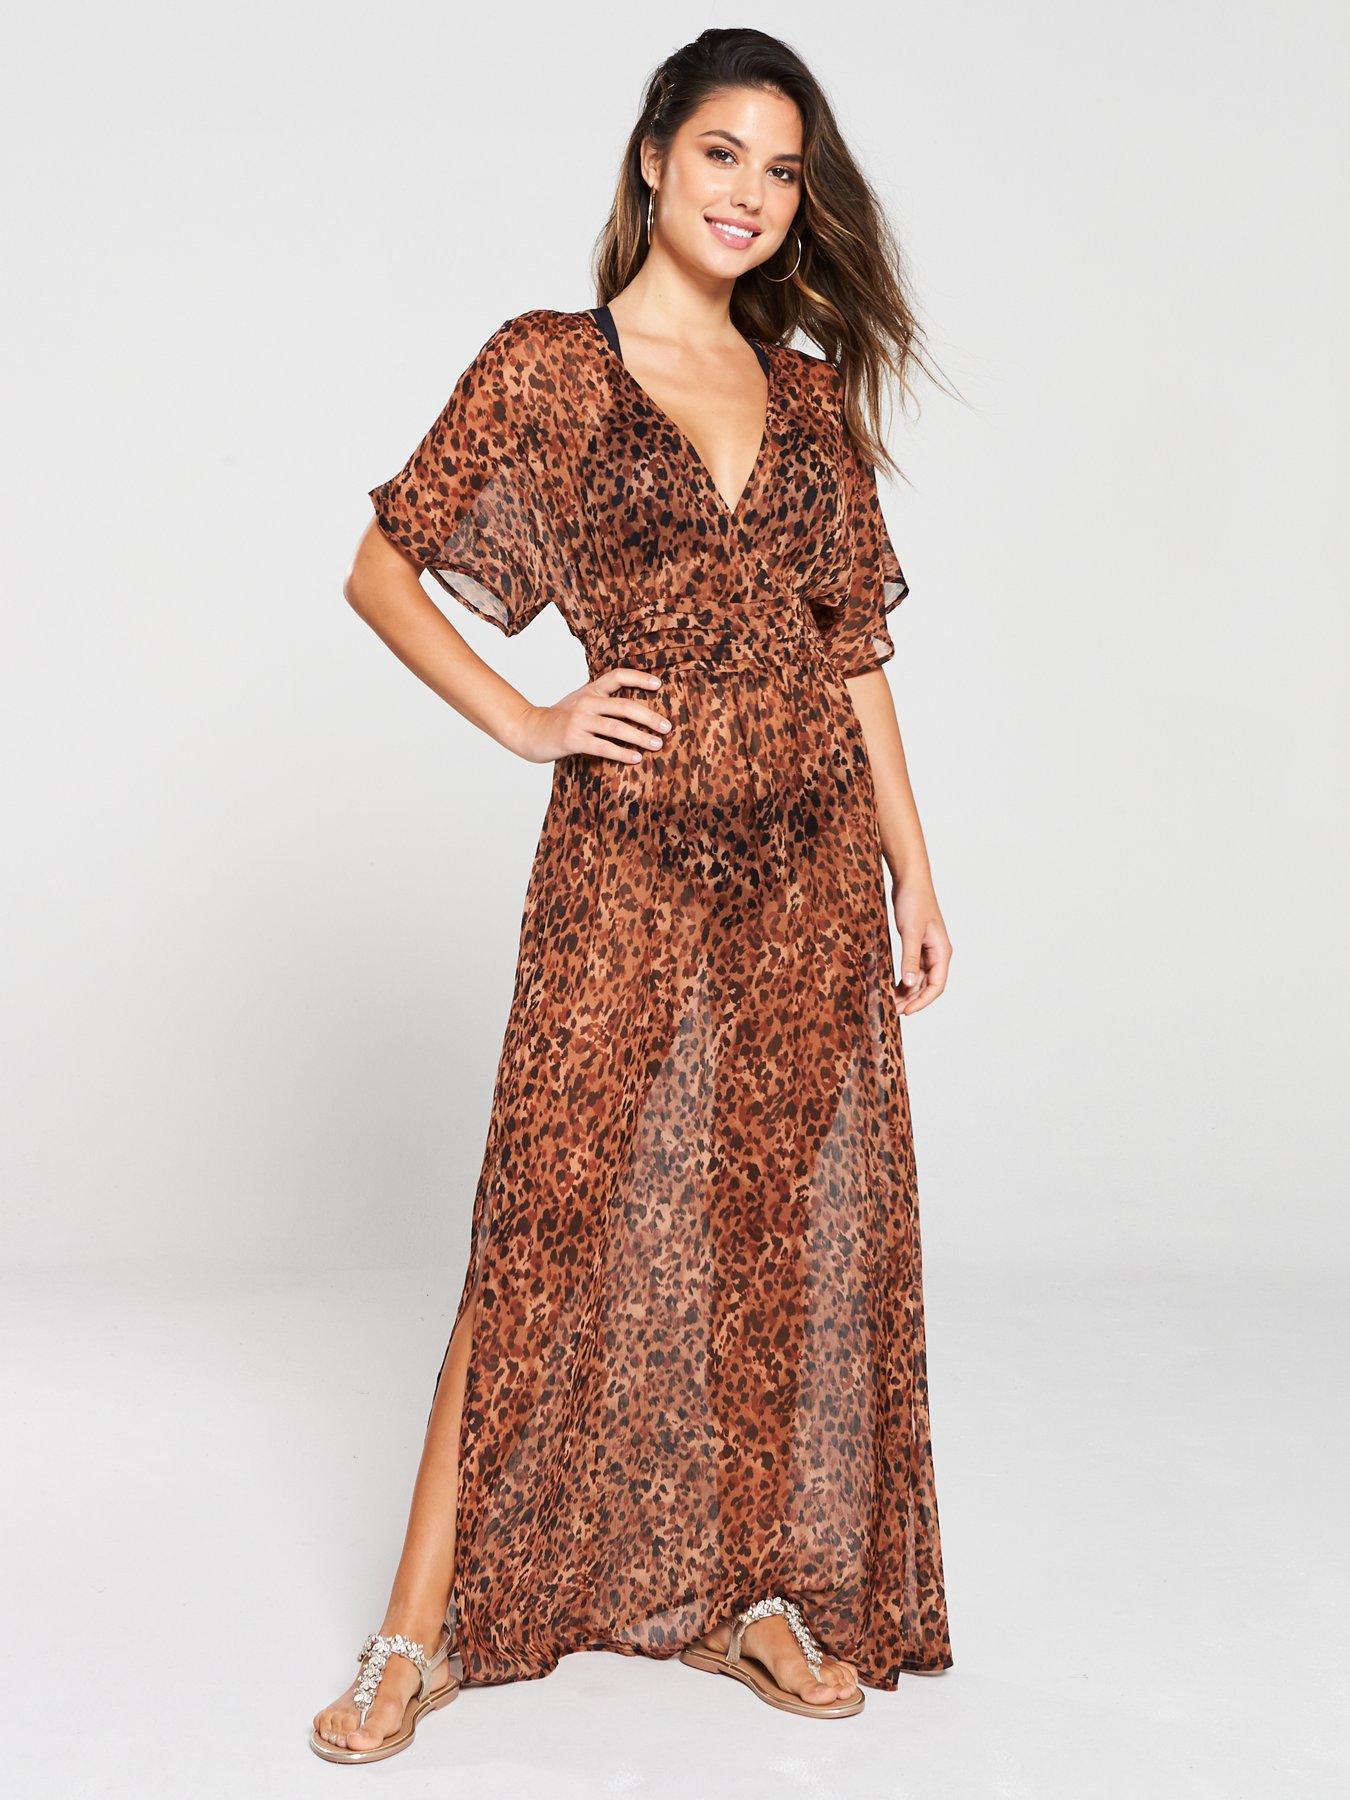 very leopard print dress